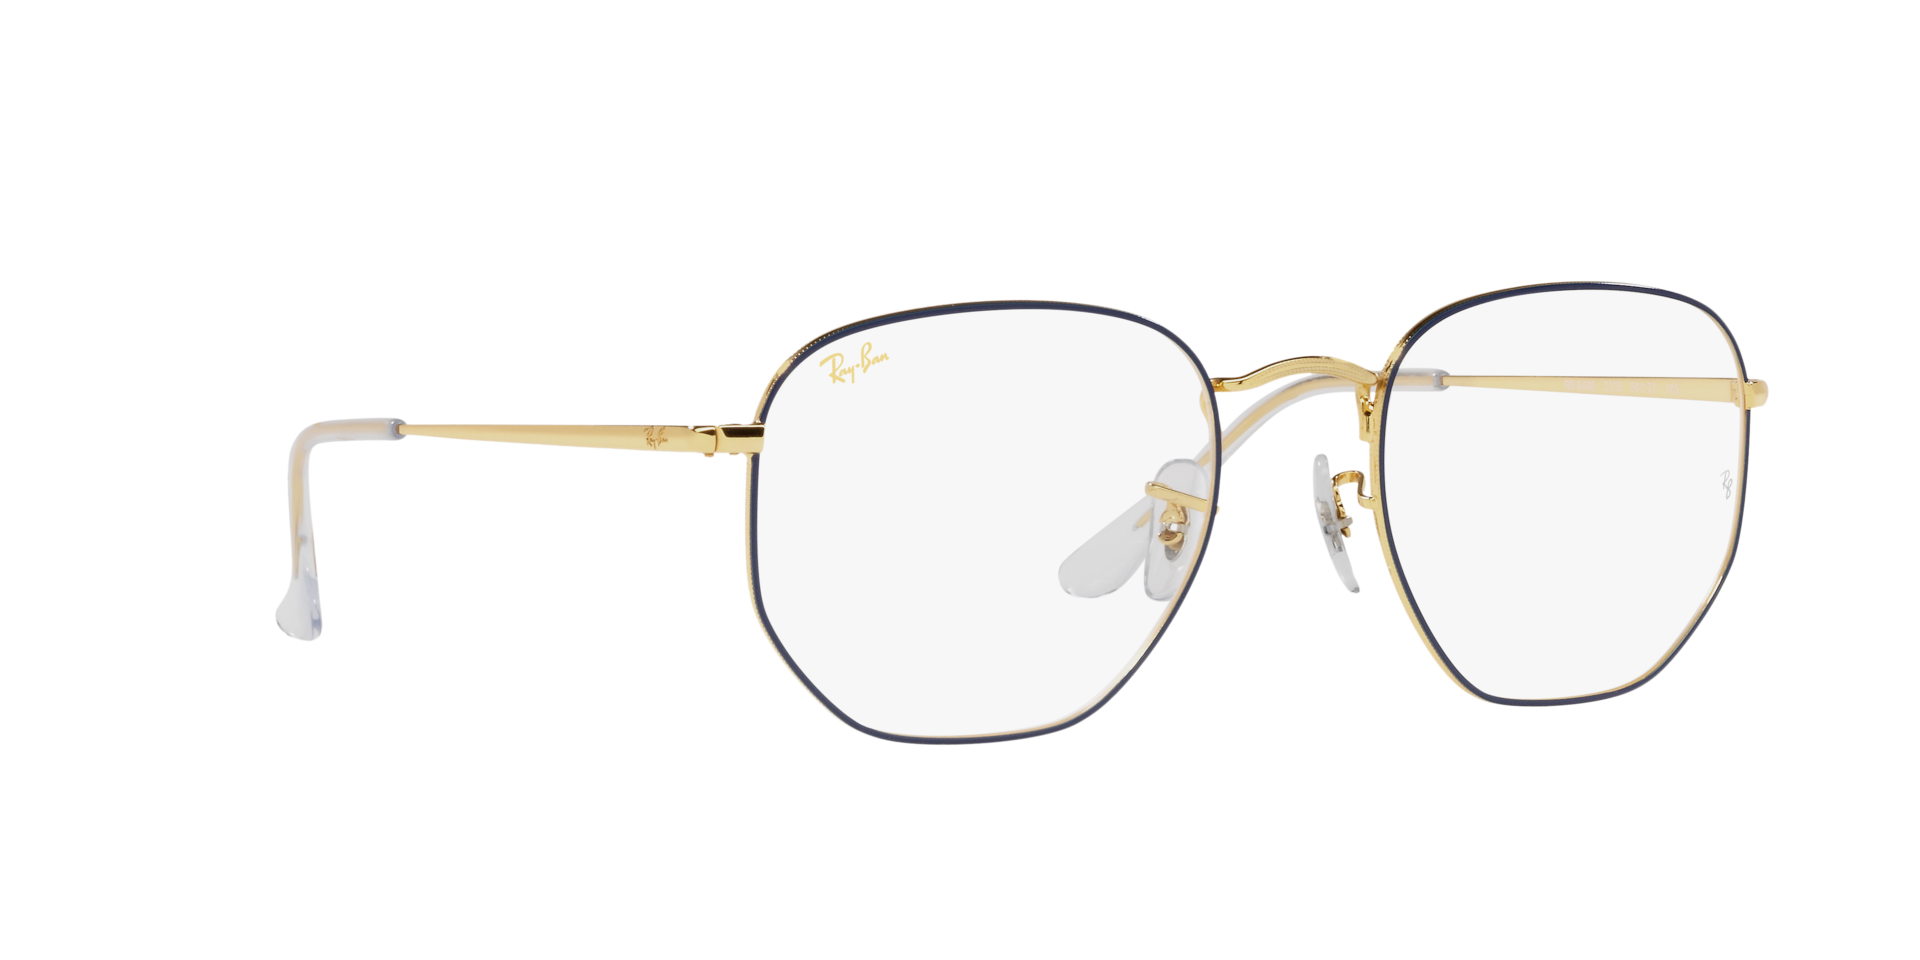 Buy Hexagonal Optics Eyeglasses Online at Ray-Ban